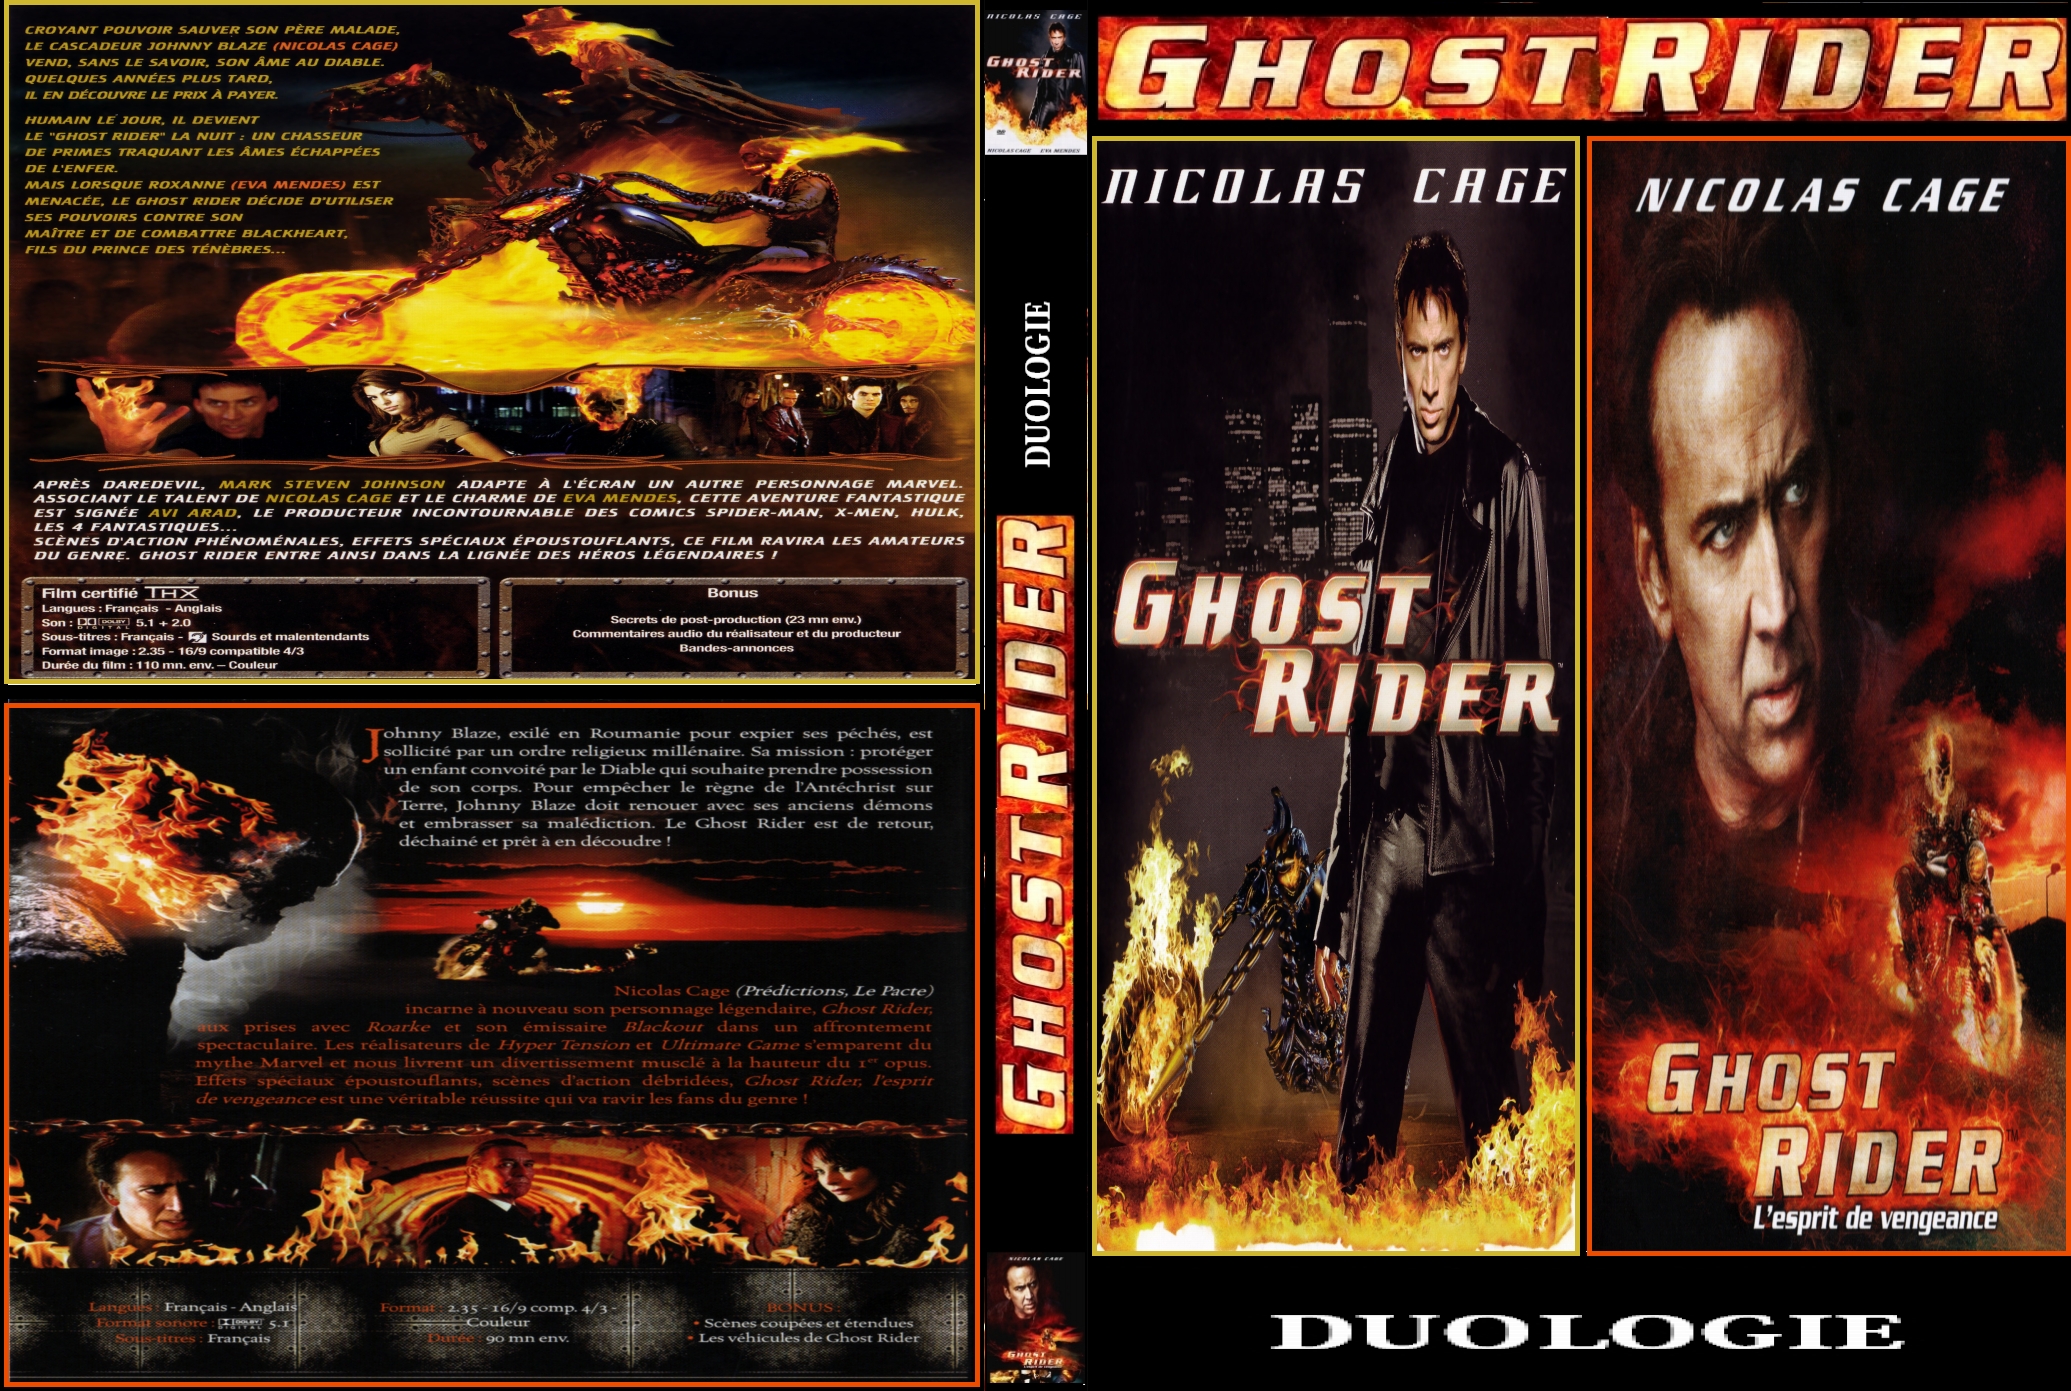 Jaquette DVD Ghost Rider 1 & 2 custom